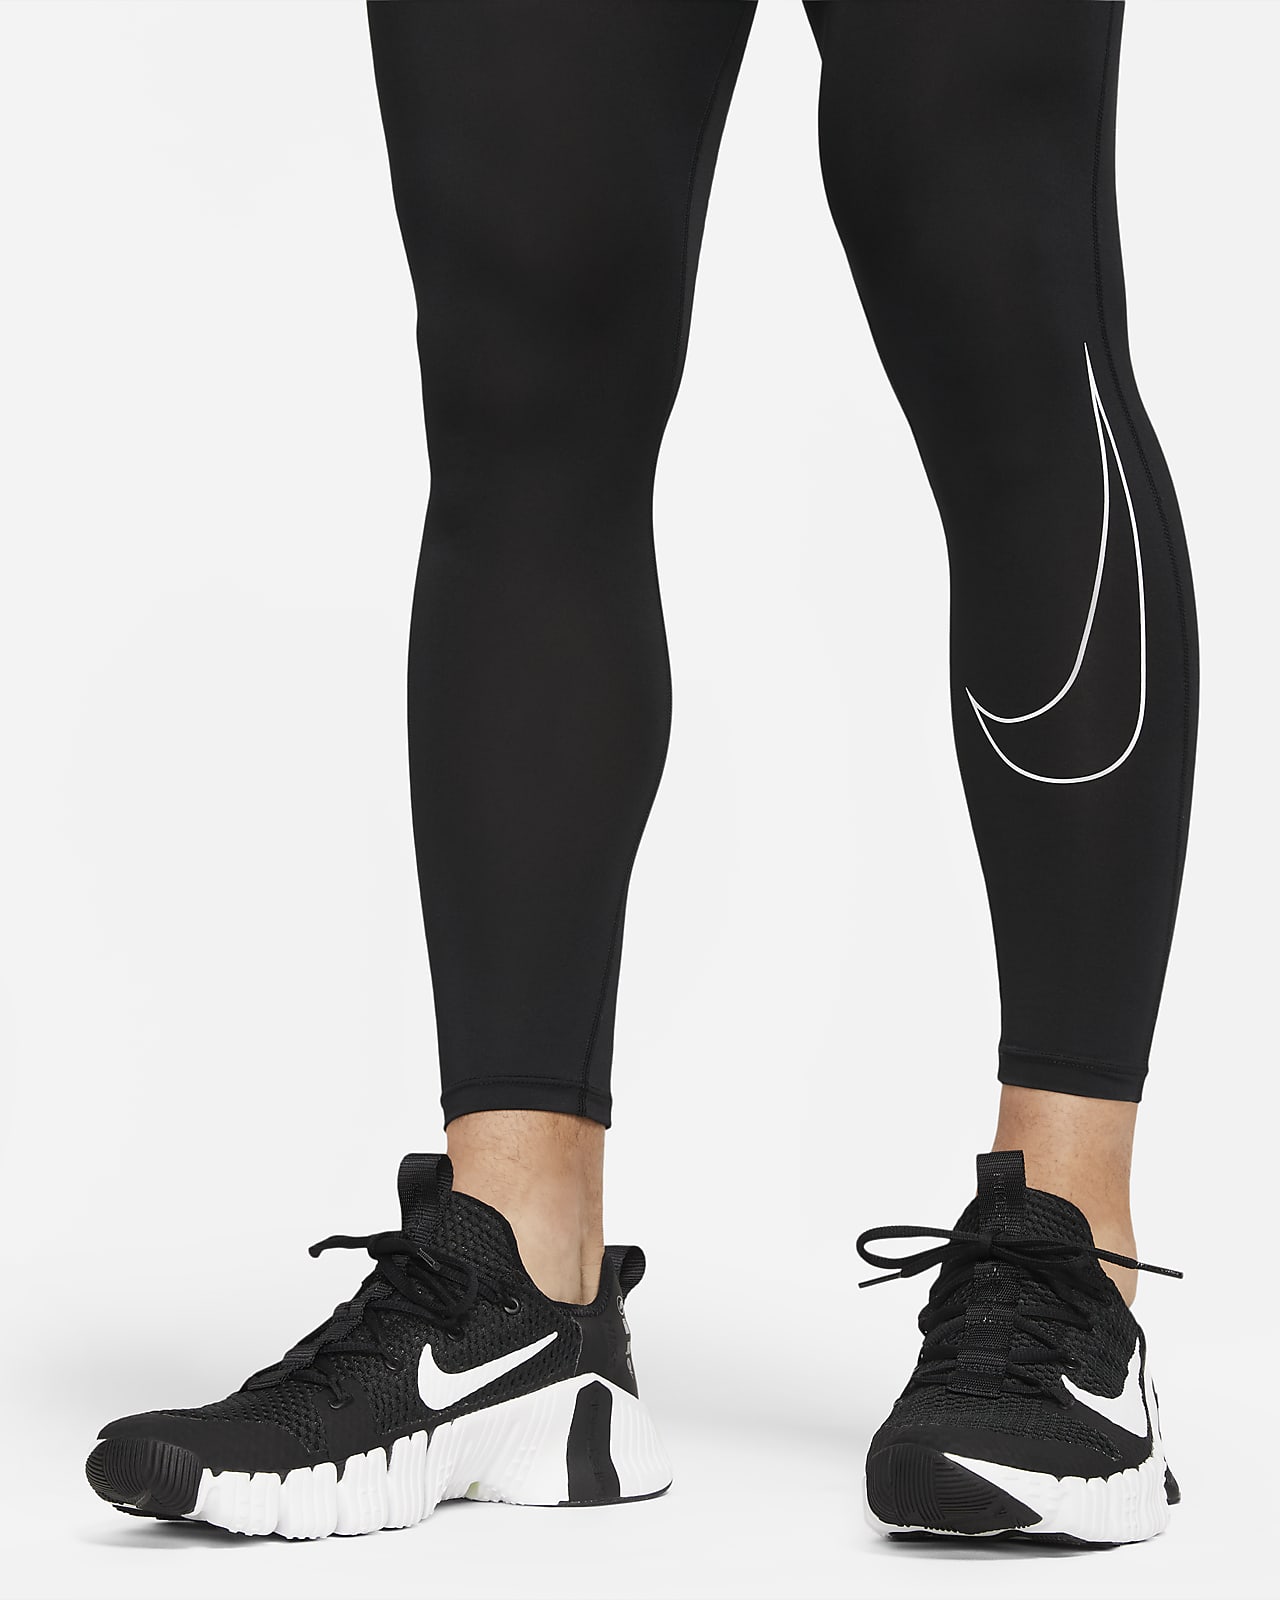 Nike Mens Pro Warm Compression Tights Pants Navy/Purple/Blue